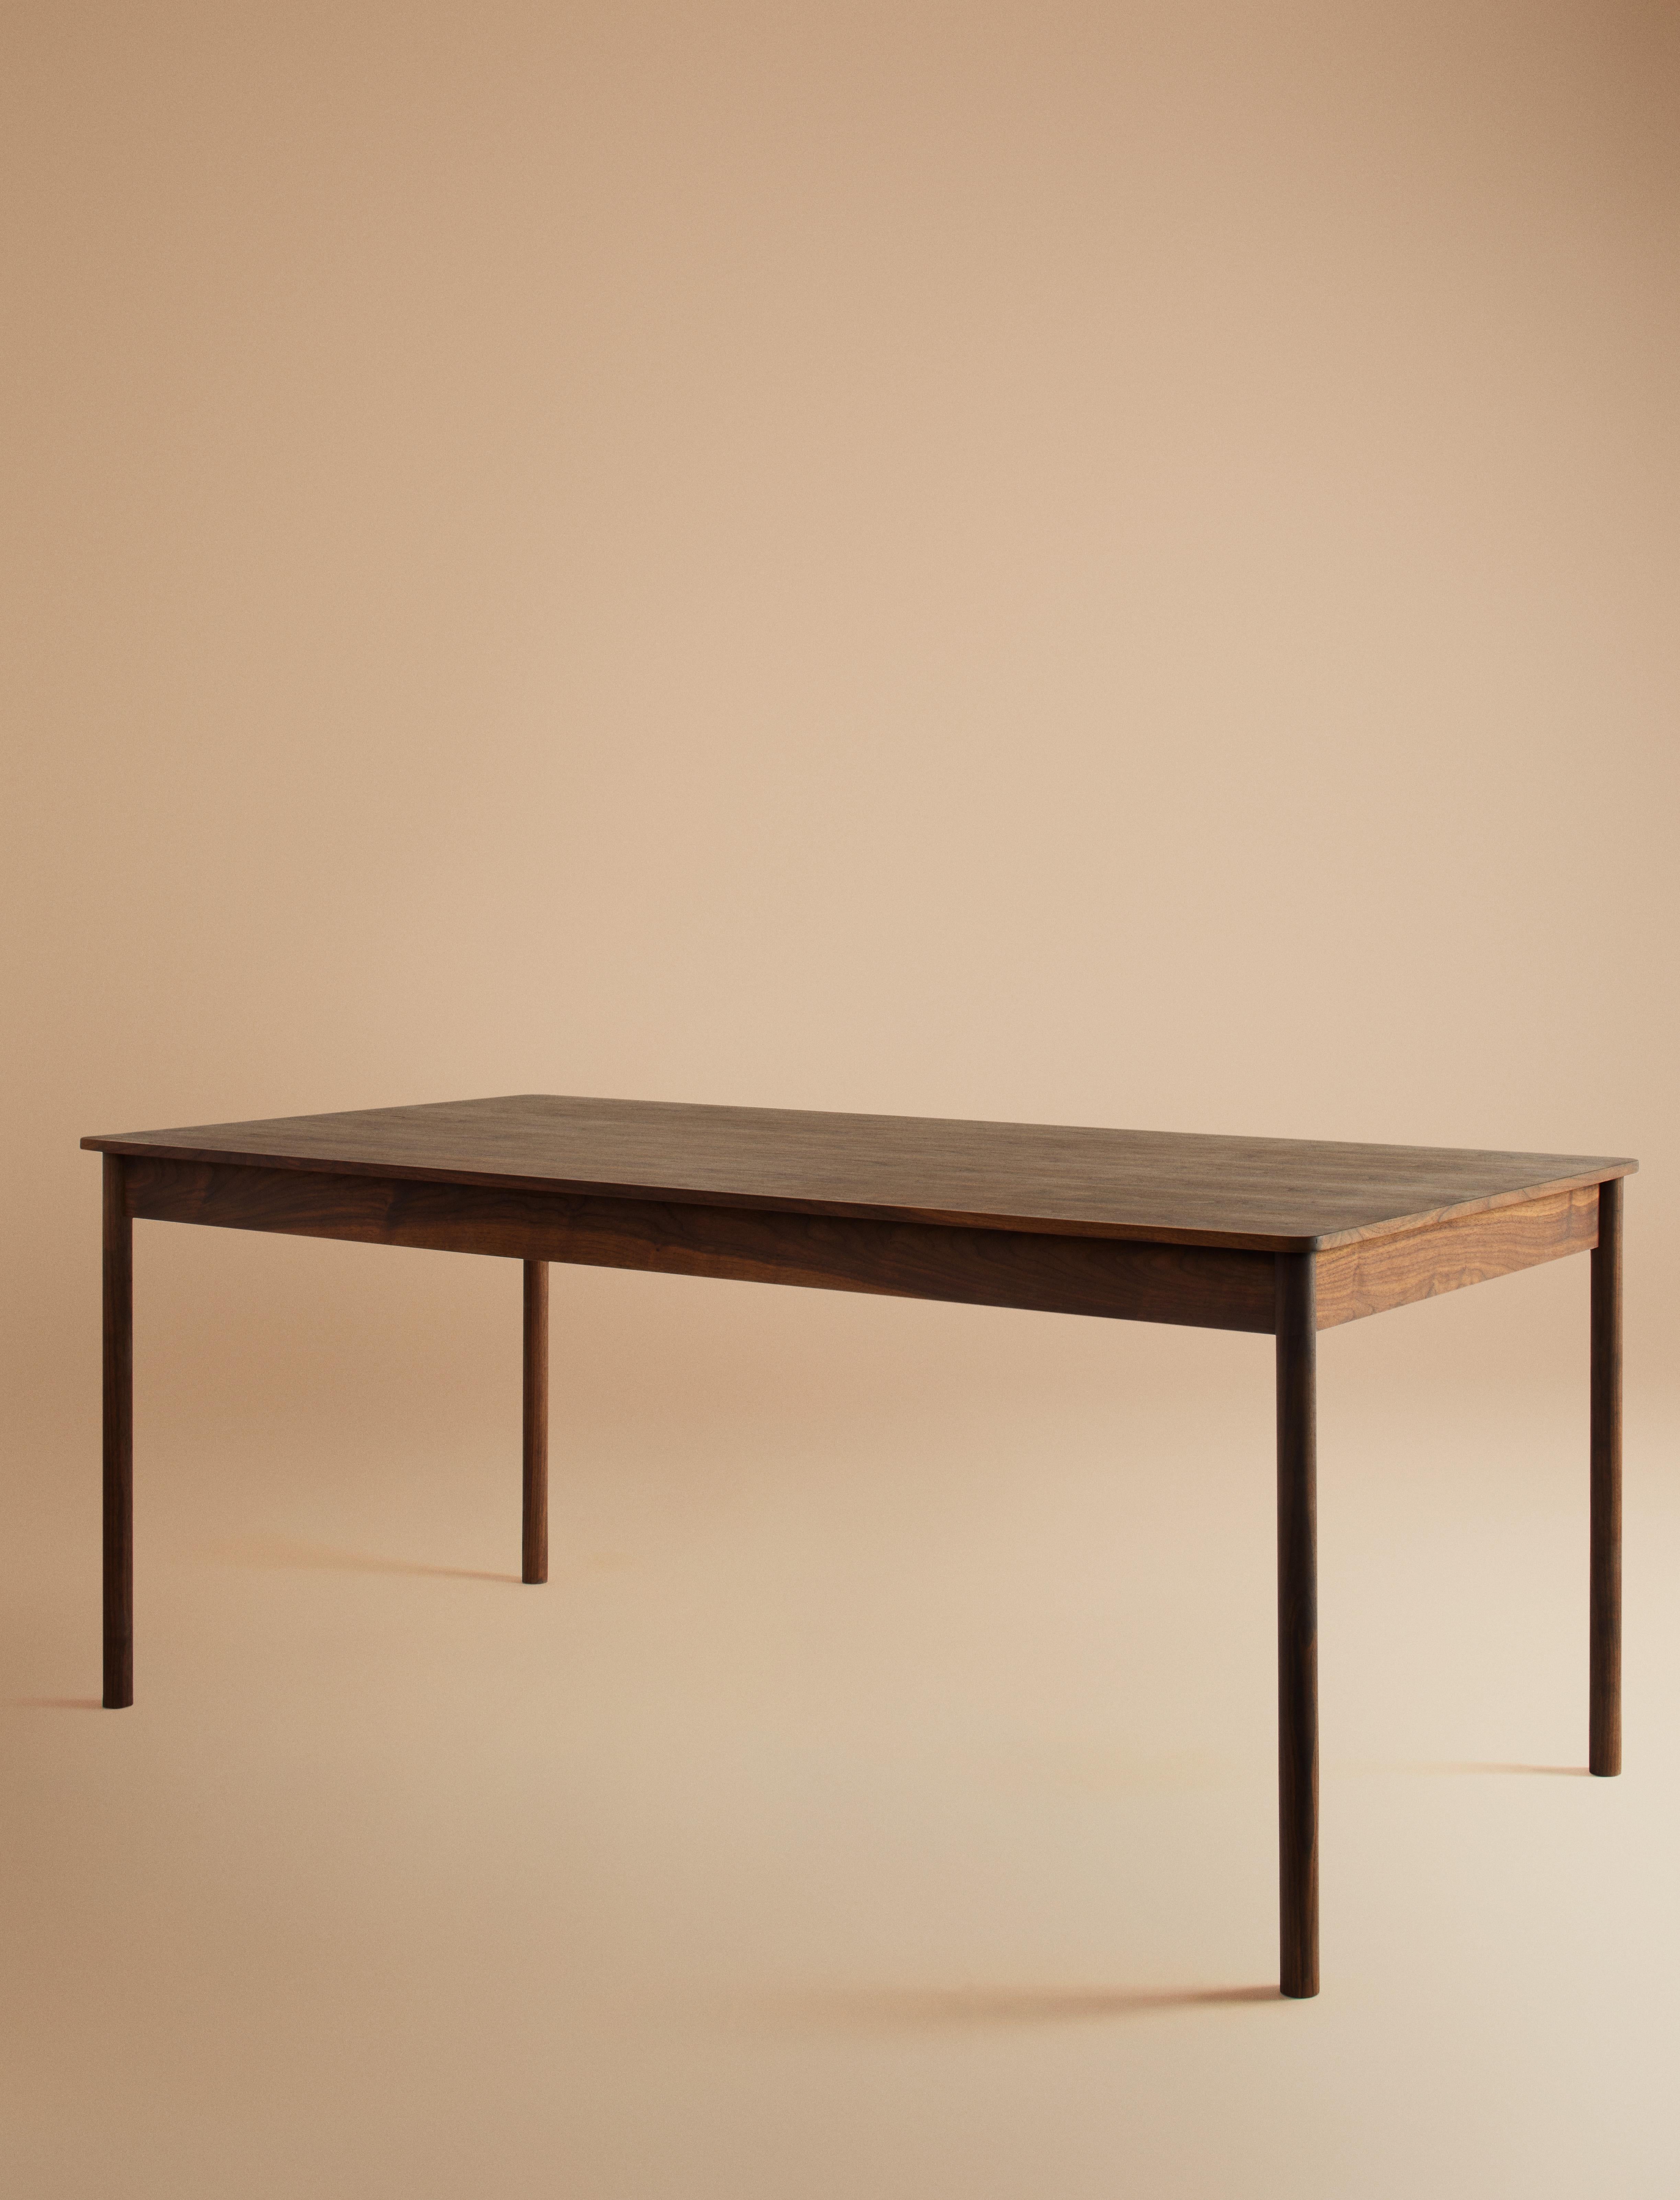 Sutton Table Handcrafted in Walnut or Oak Designed by Kevin Frankental for Lemon 1